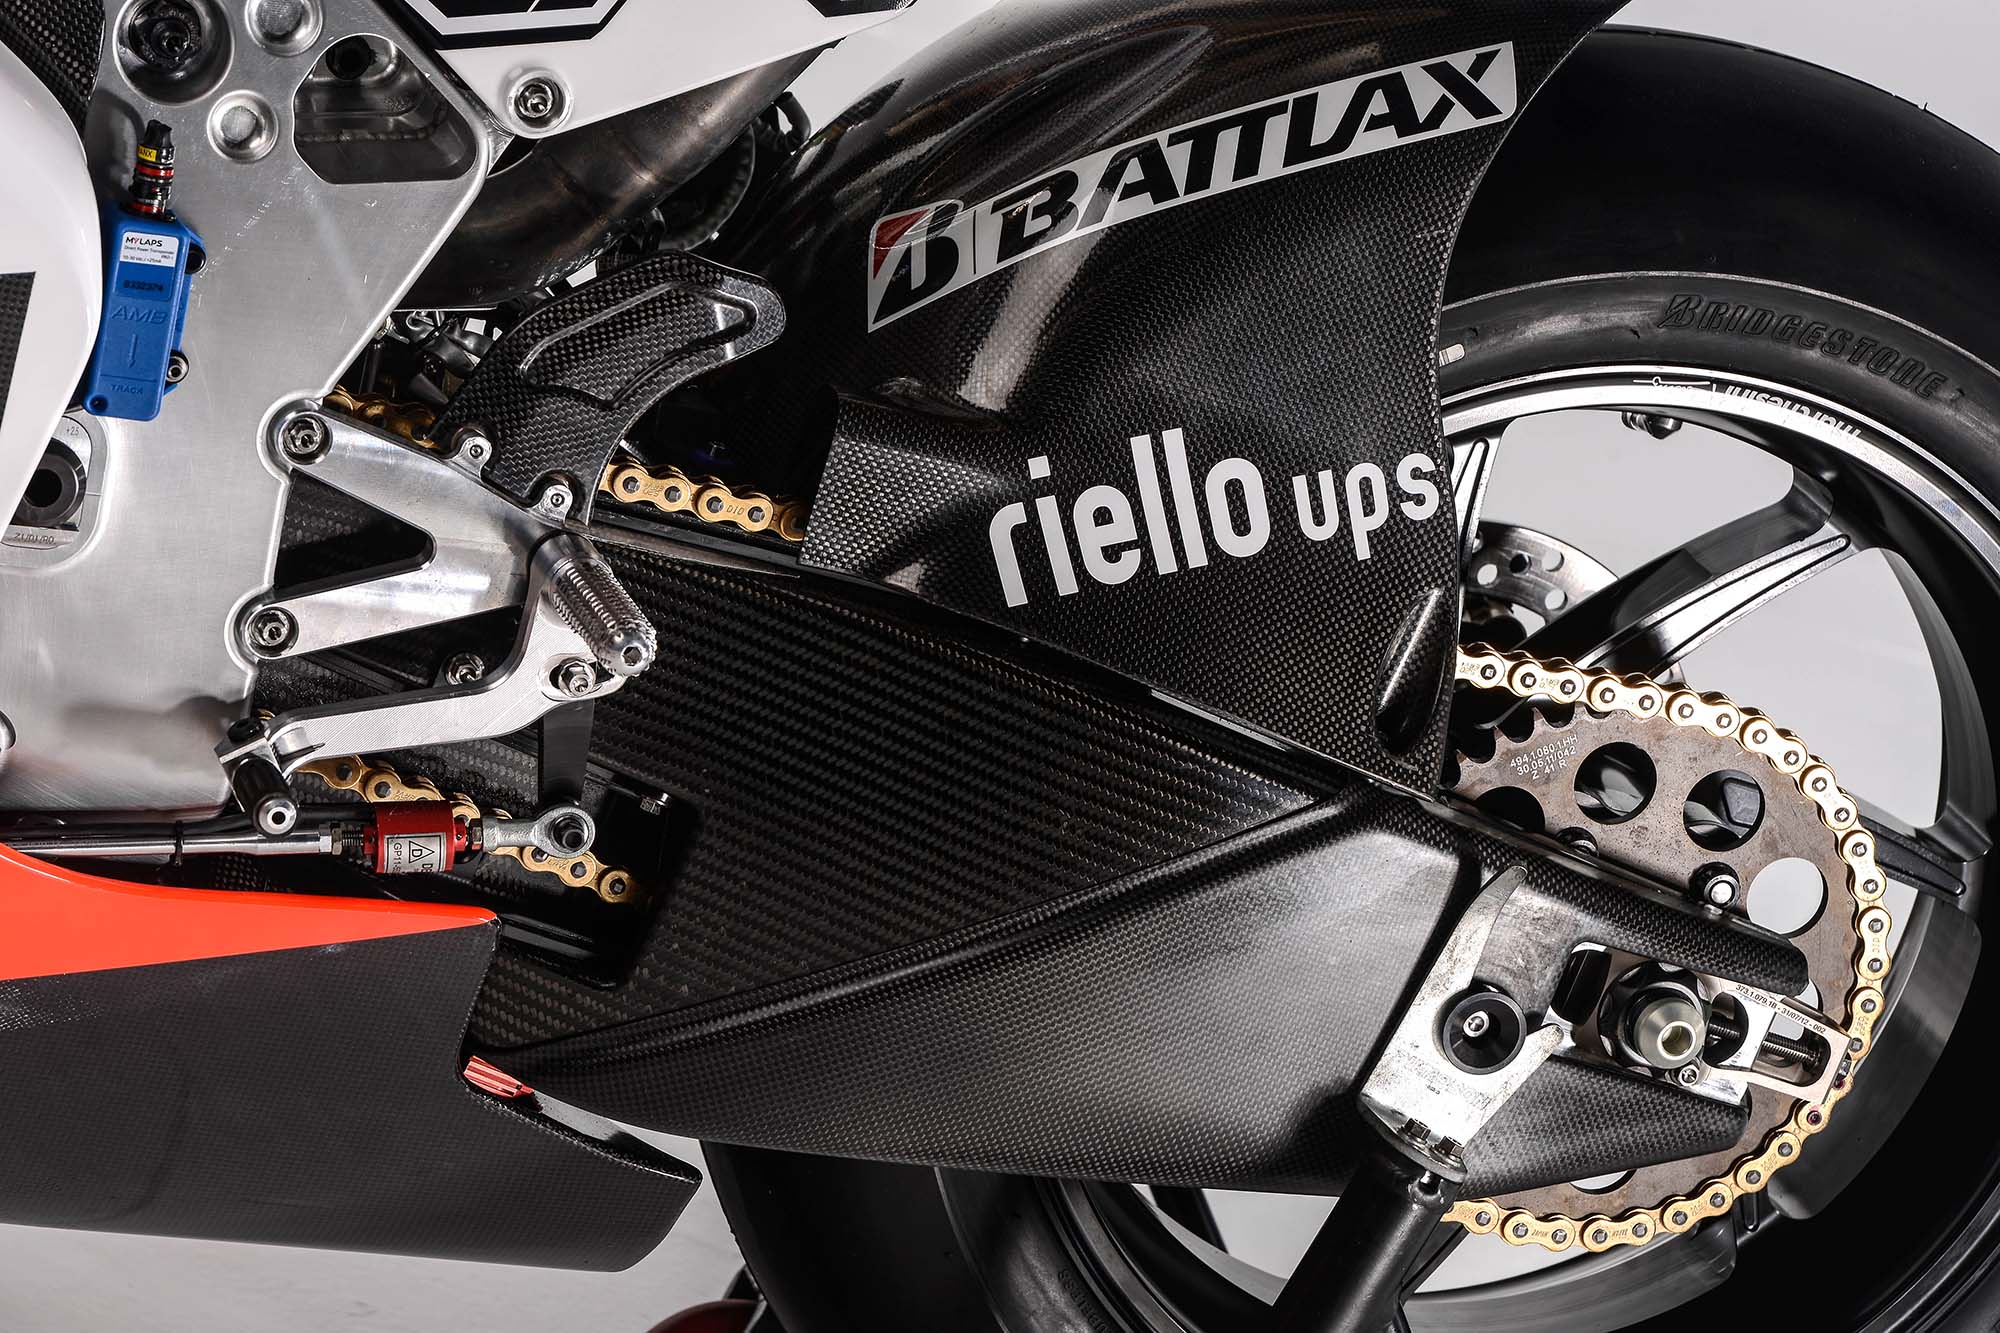 MotoGP, sistem penggerak pada Motor Ducati Desmosedici GP13: Spesifikasi dan Foto Motor Ducati Desmosedici GP13